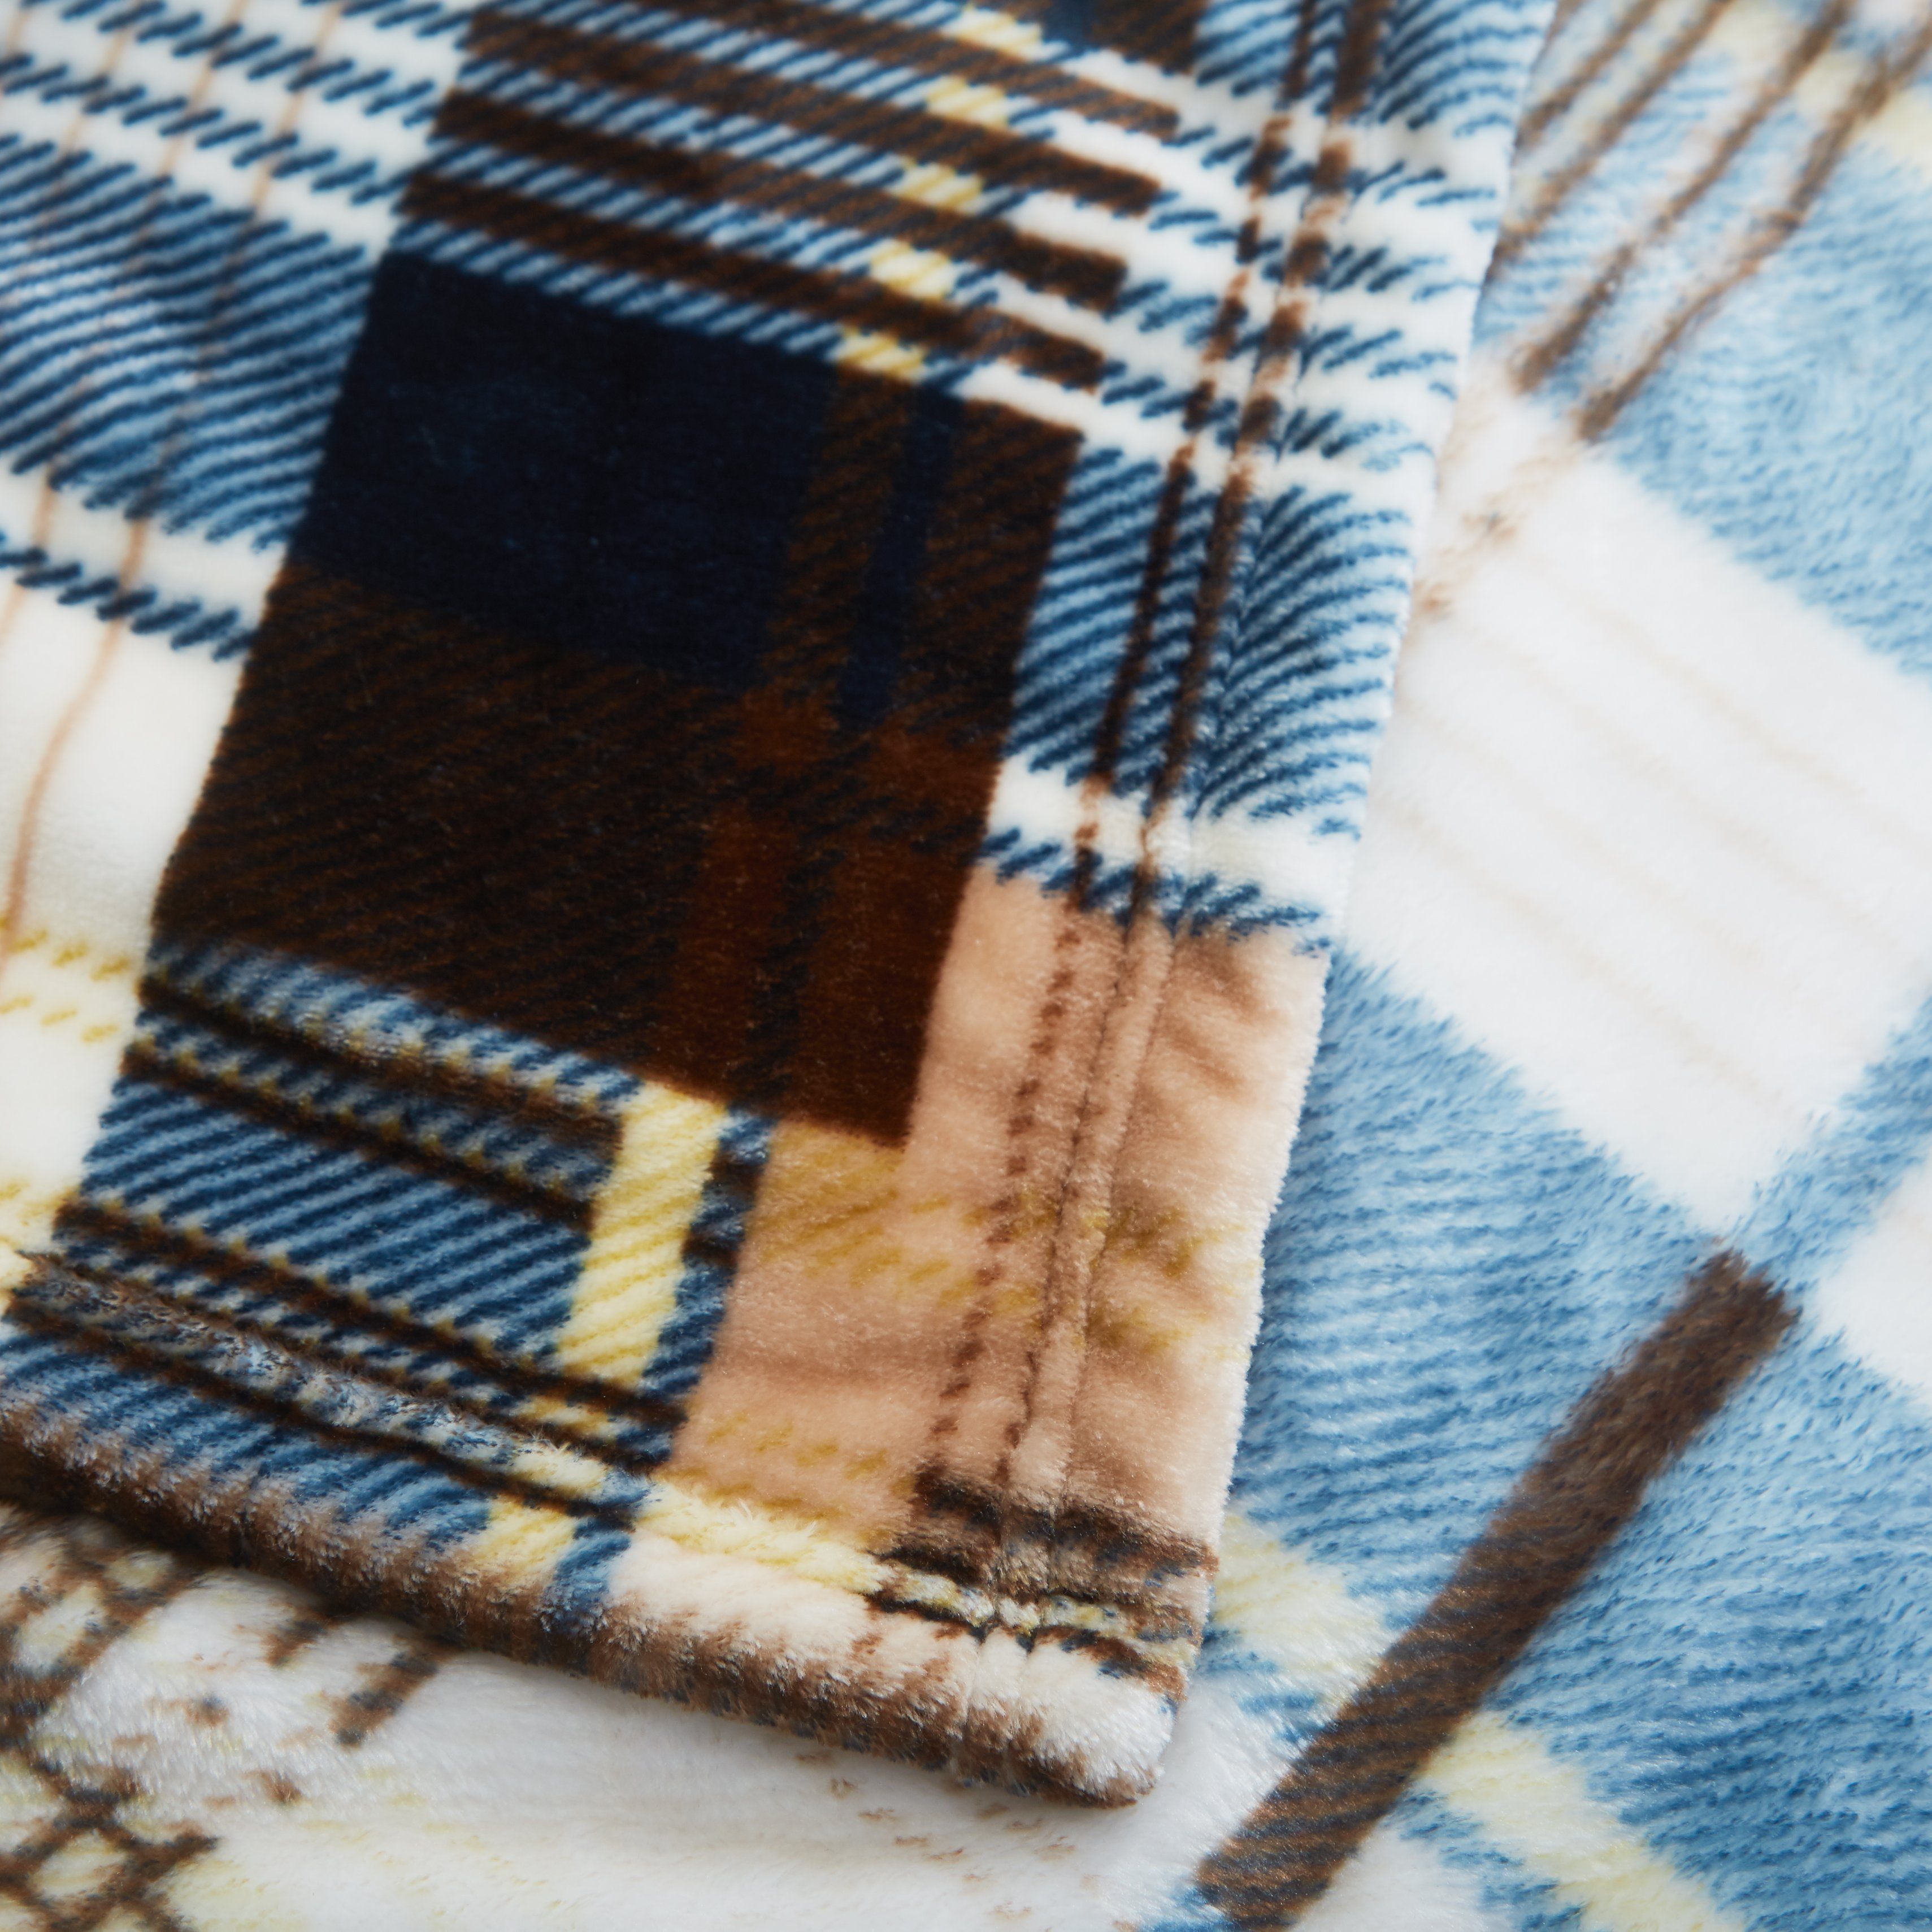 Tache Super Soft Winter Cabin Flannel Throw Blanket - Tache Home Fashion